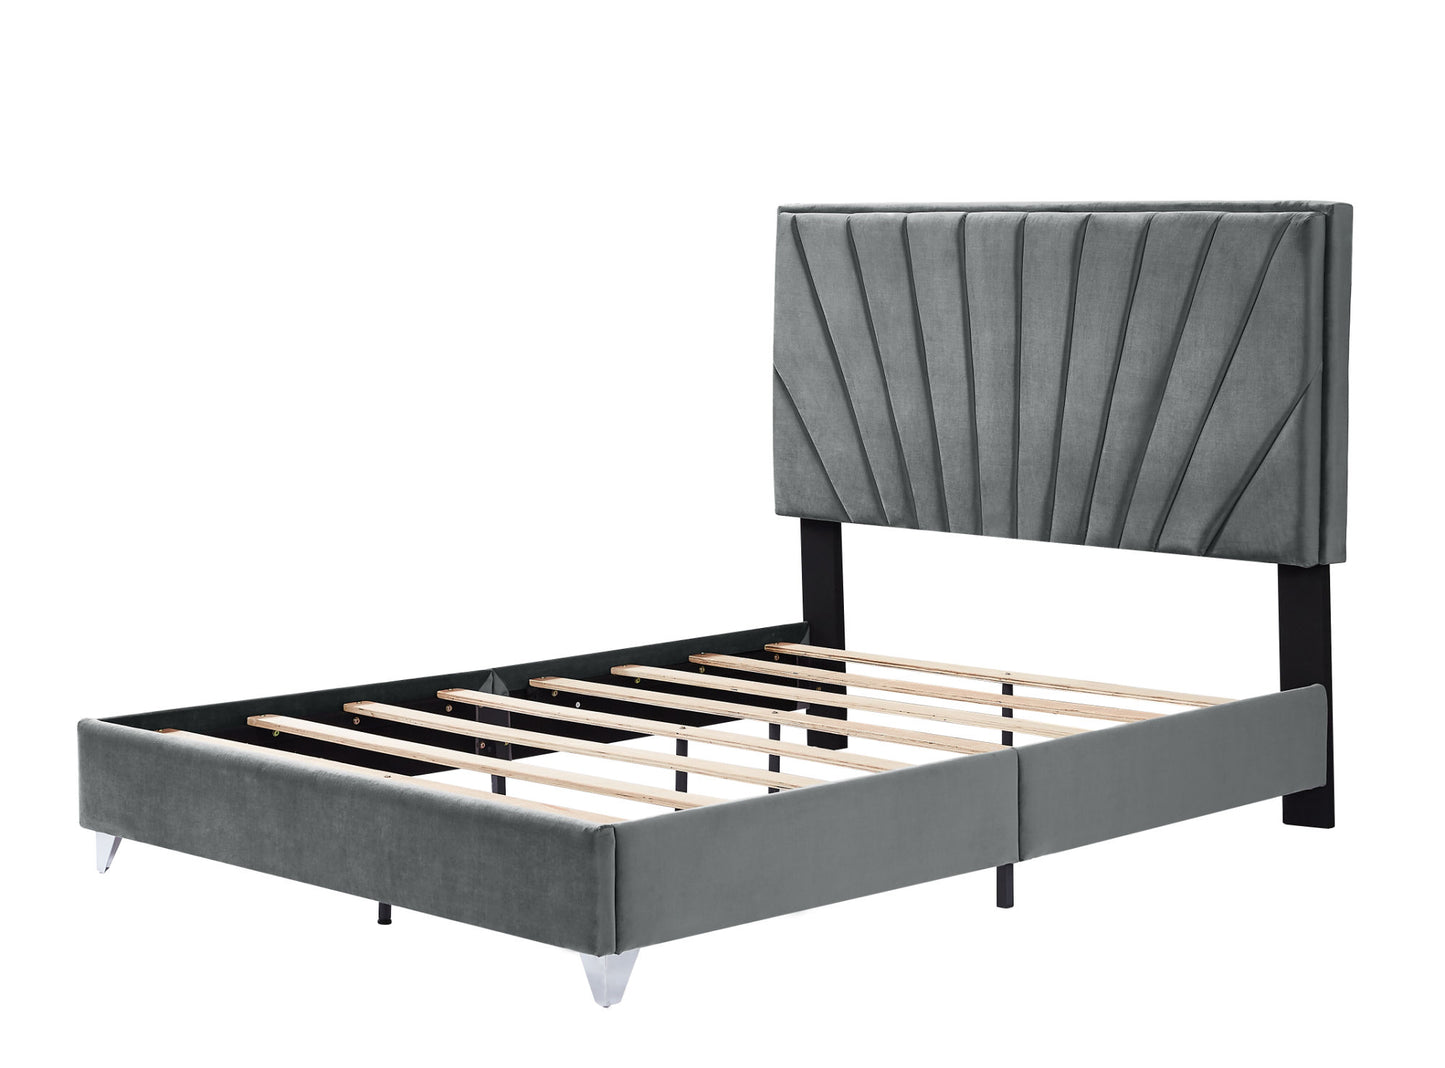 B108 Full bed Beautiful line stripe cushion headboard , strong wooden slats + metal support feet, Gray Flannelette